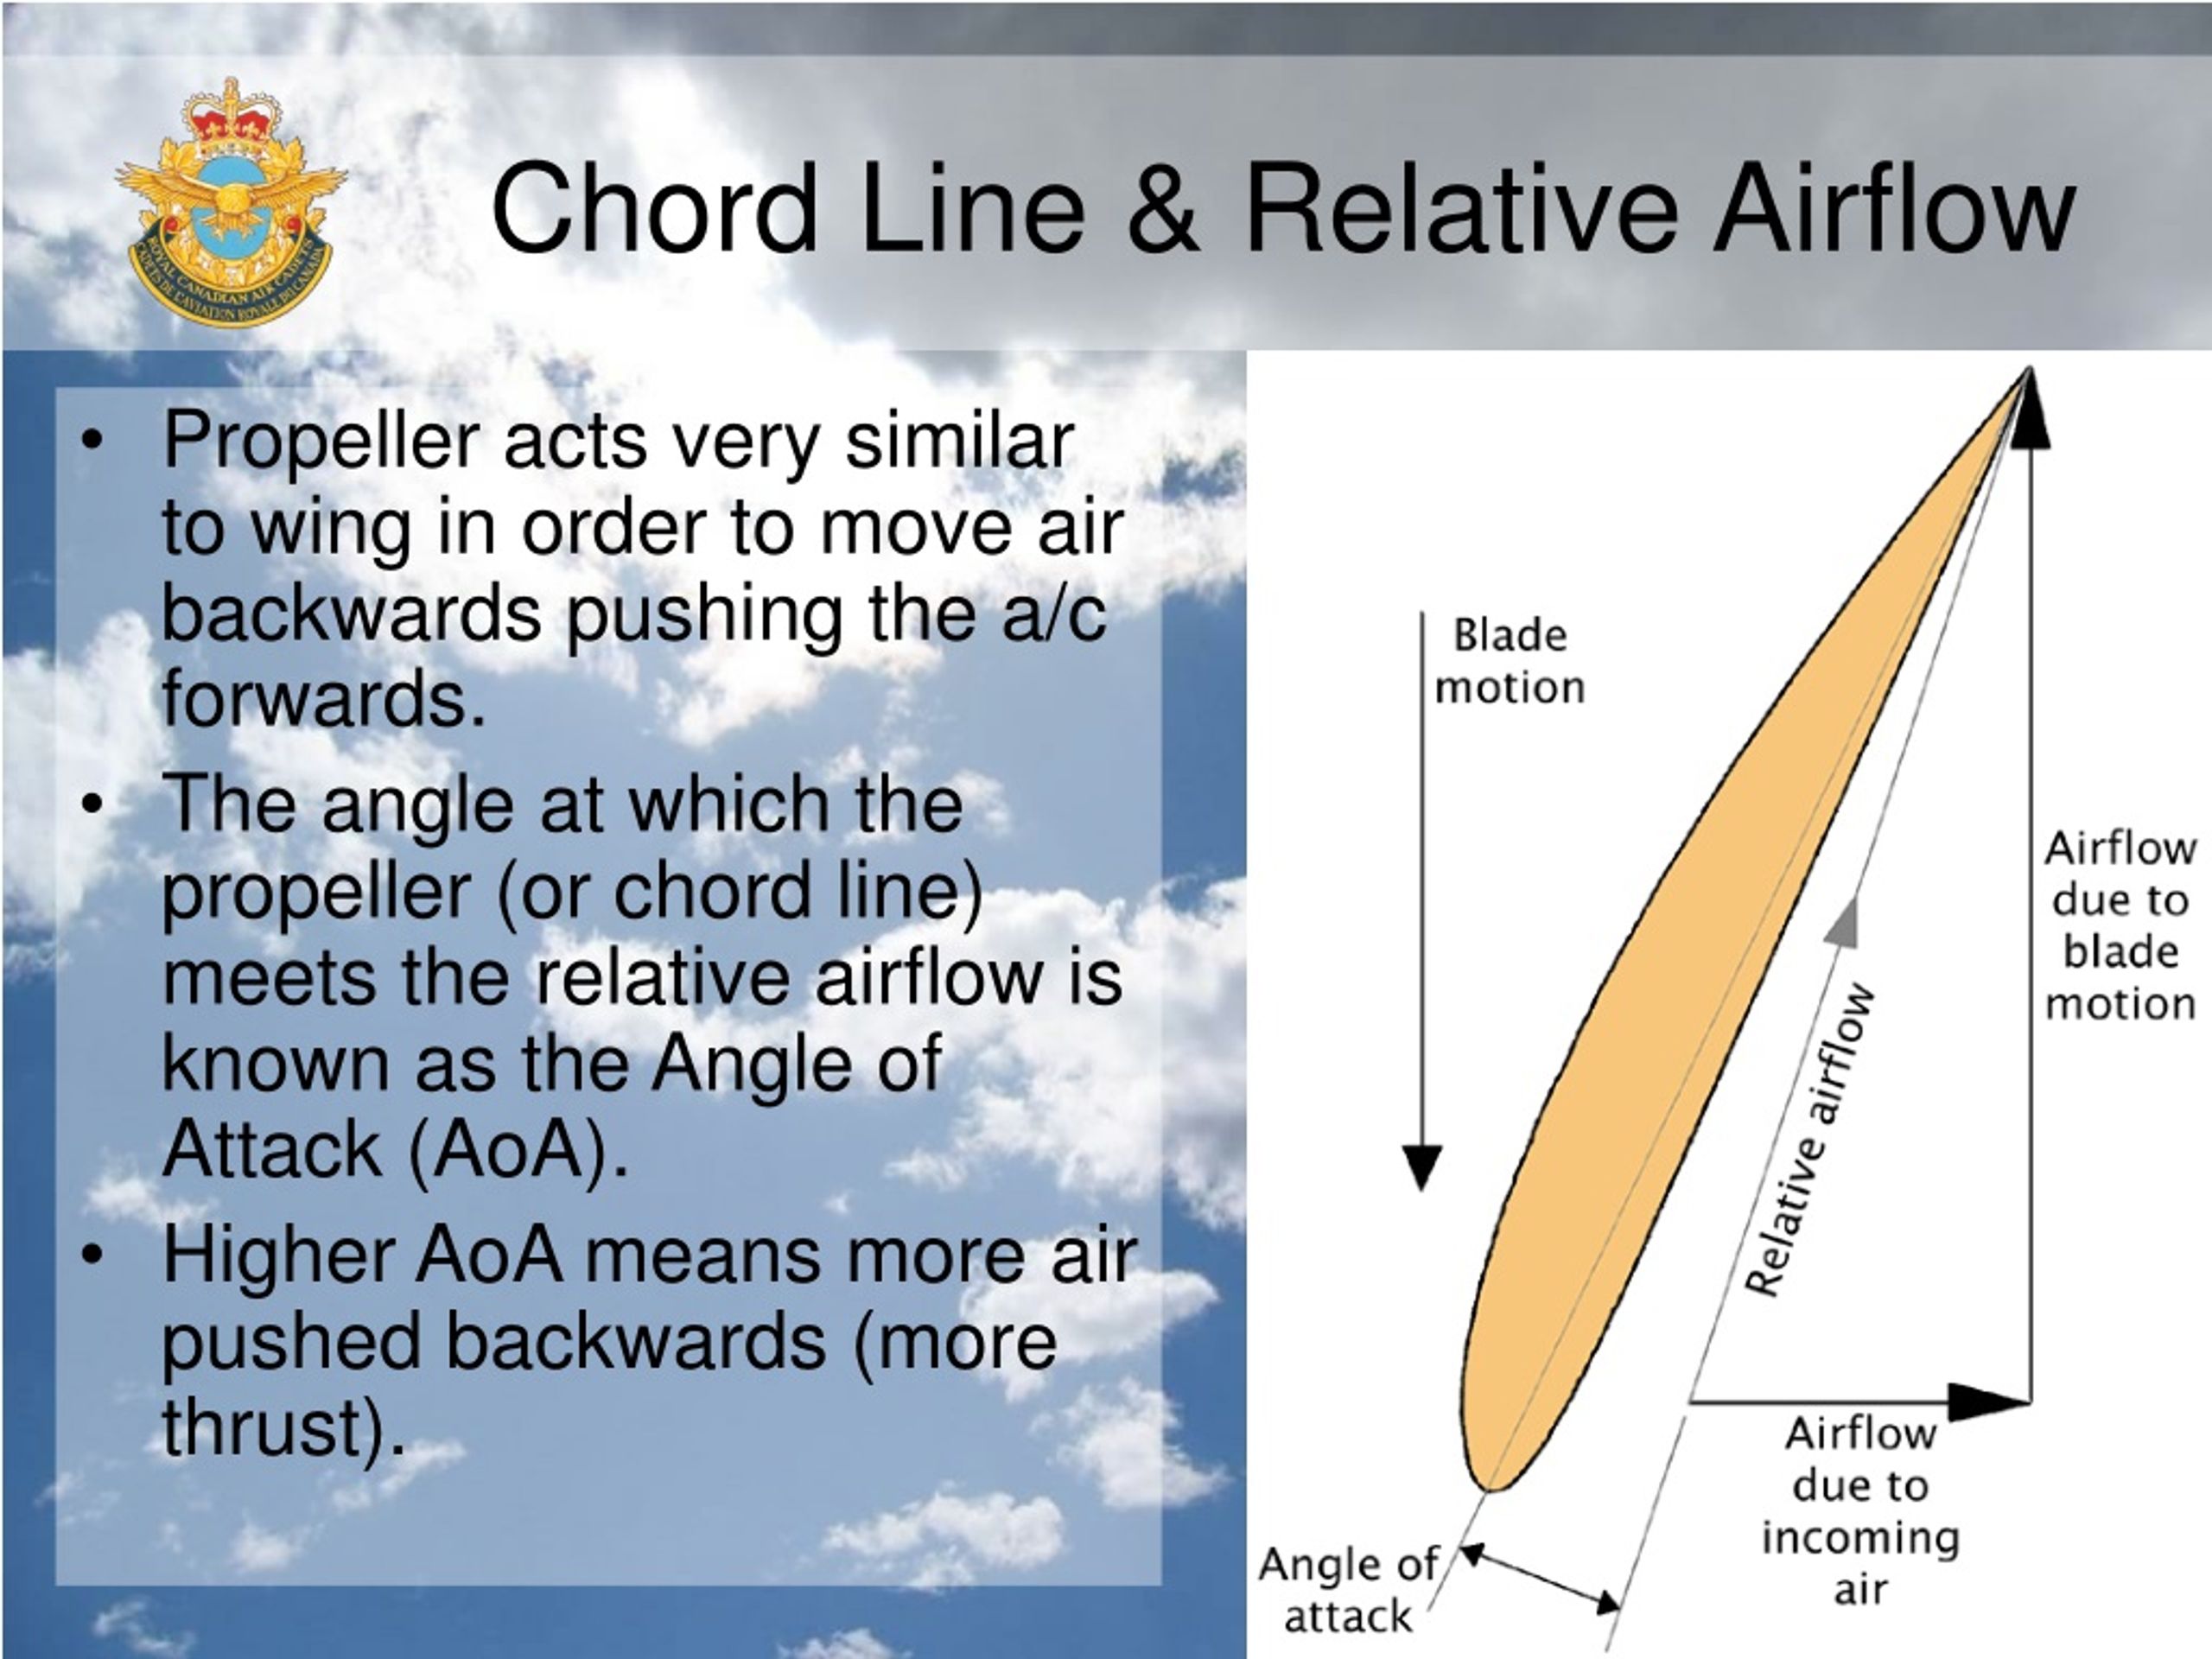 effective airflow vs relative airflow